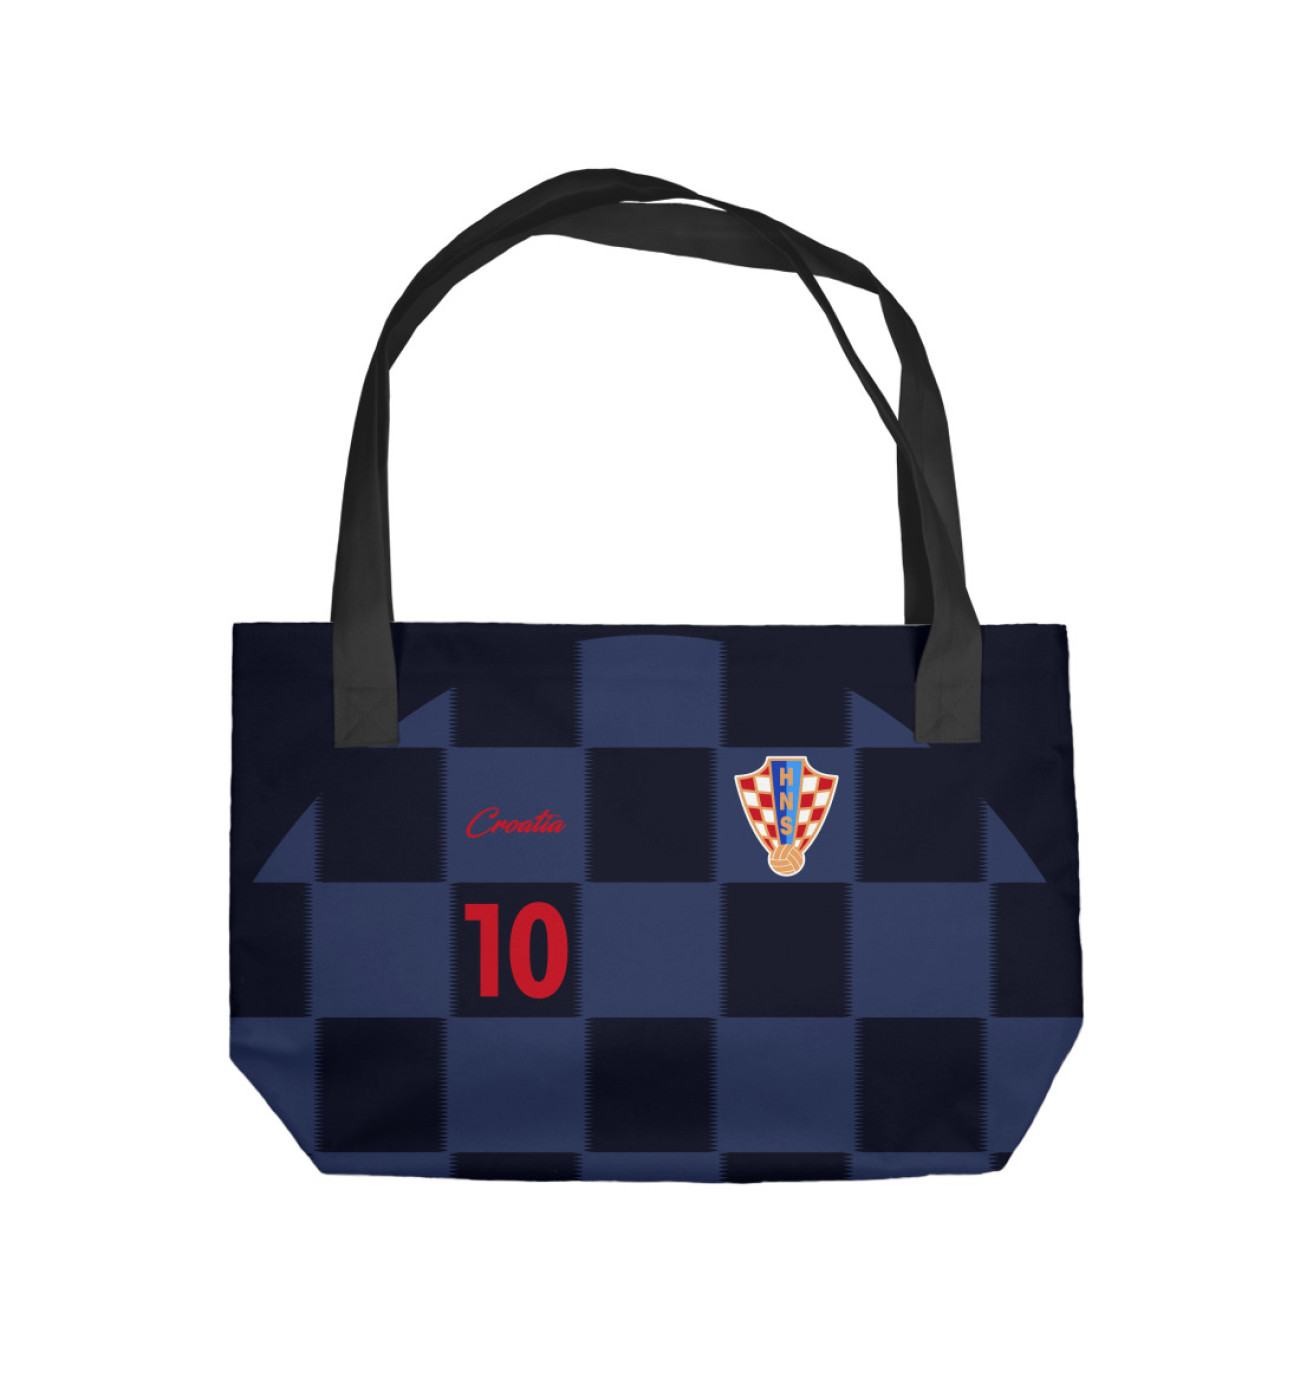 Пляжная сумка Лука Модрич - Сборная Хорватии, артикул: FLT-364471-sup